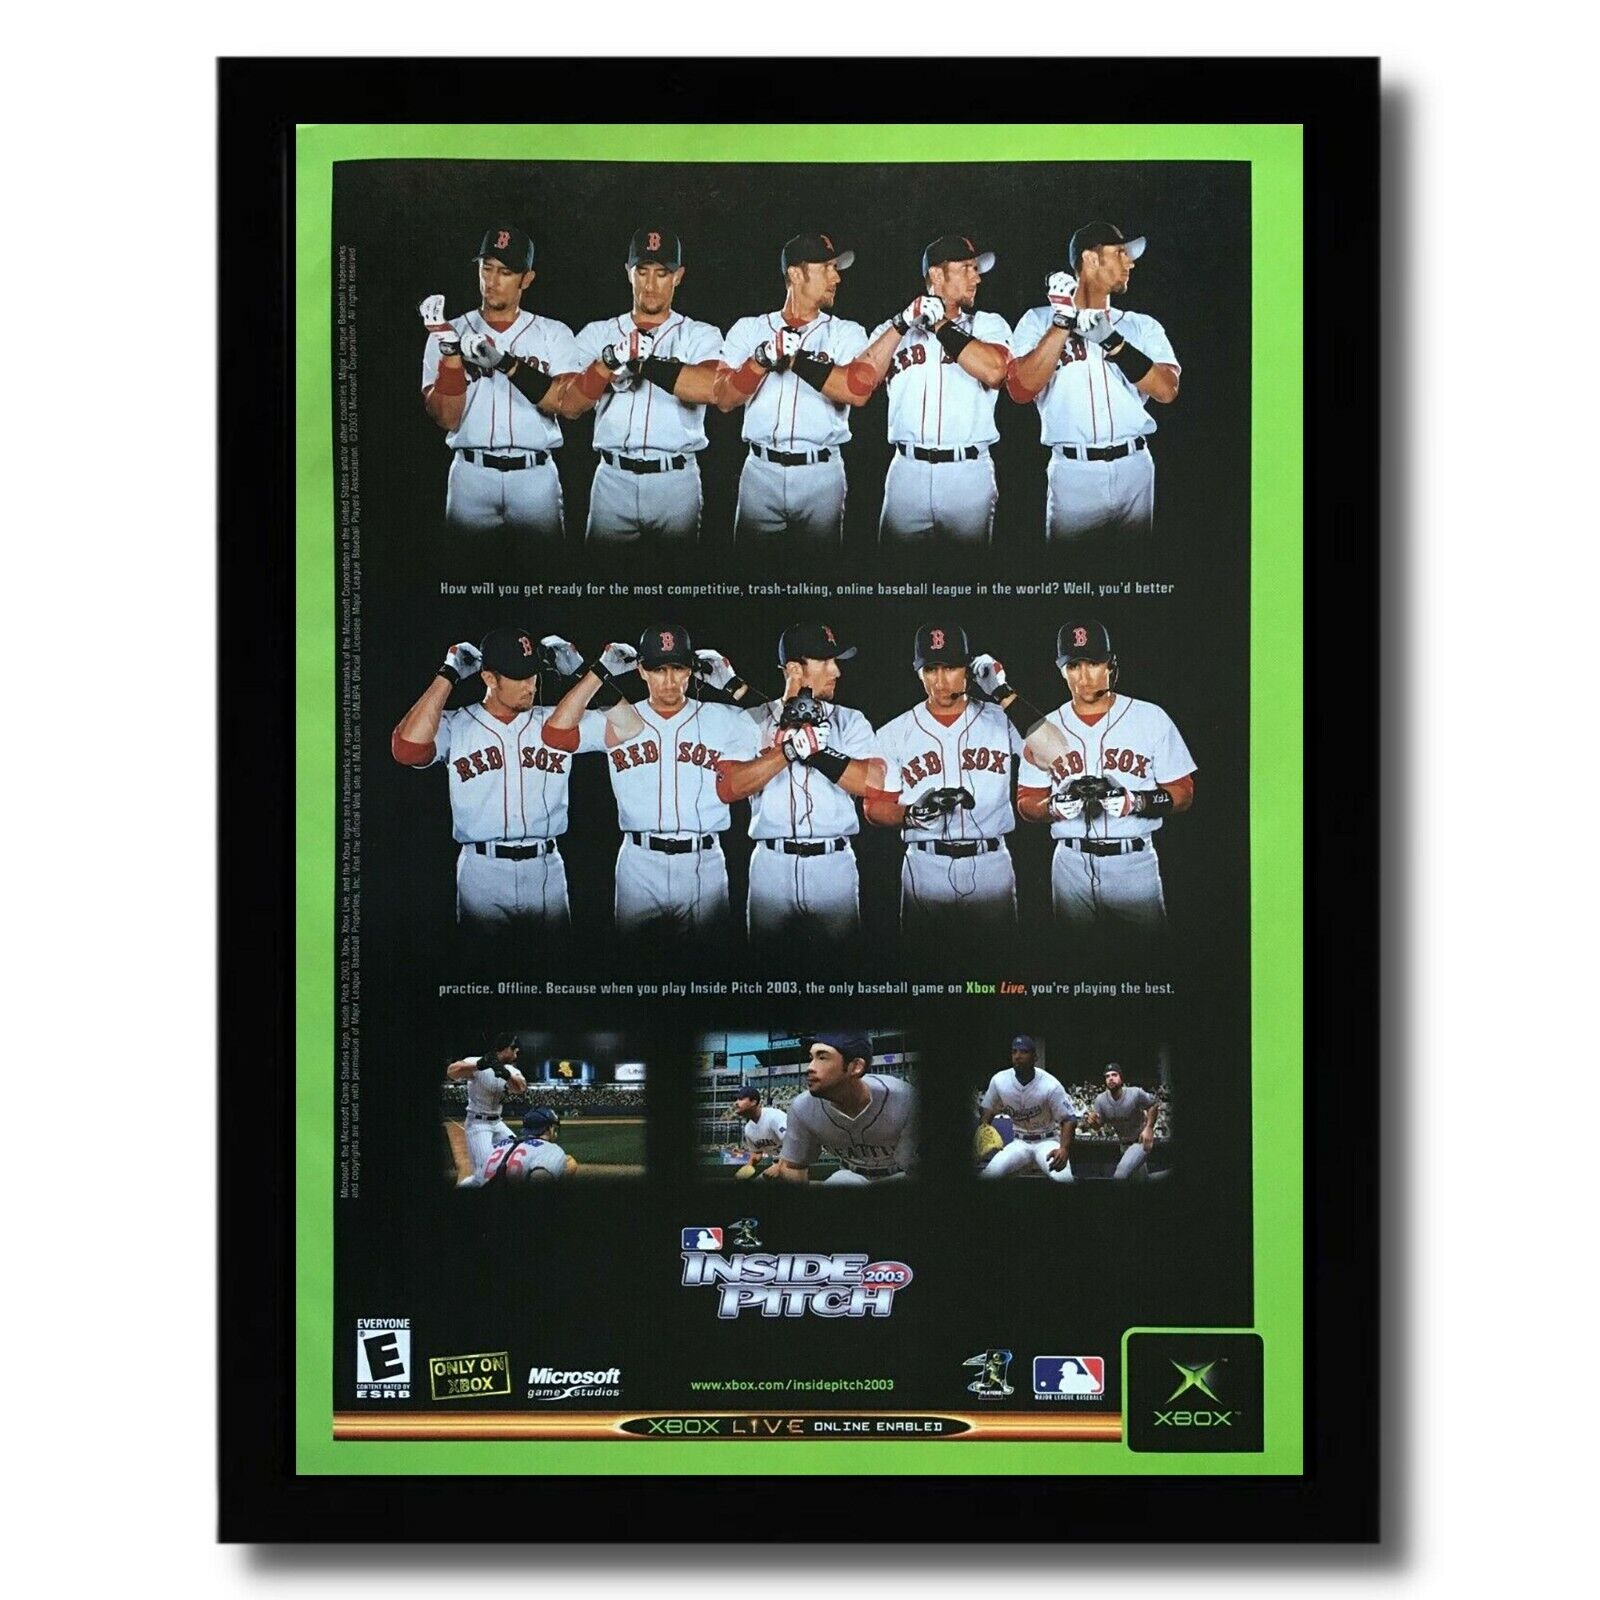 MLB Inside Pitch 2003 Framed Print Ad/Poster Nomar Garciaparra Red Sox Baseball